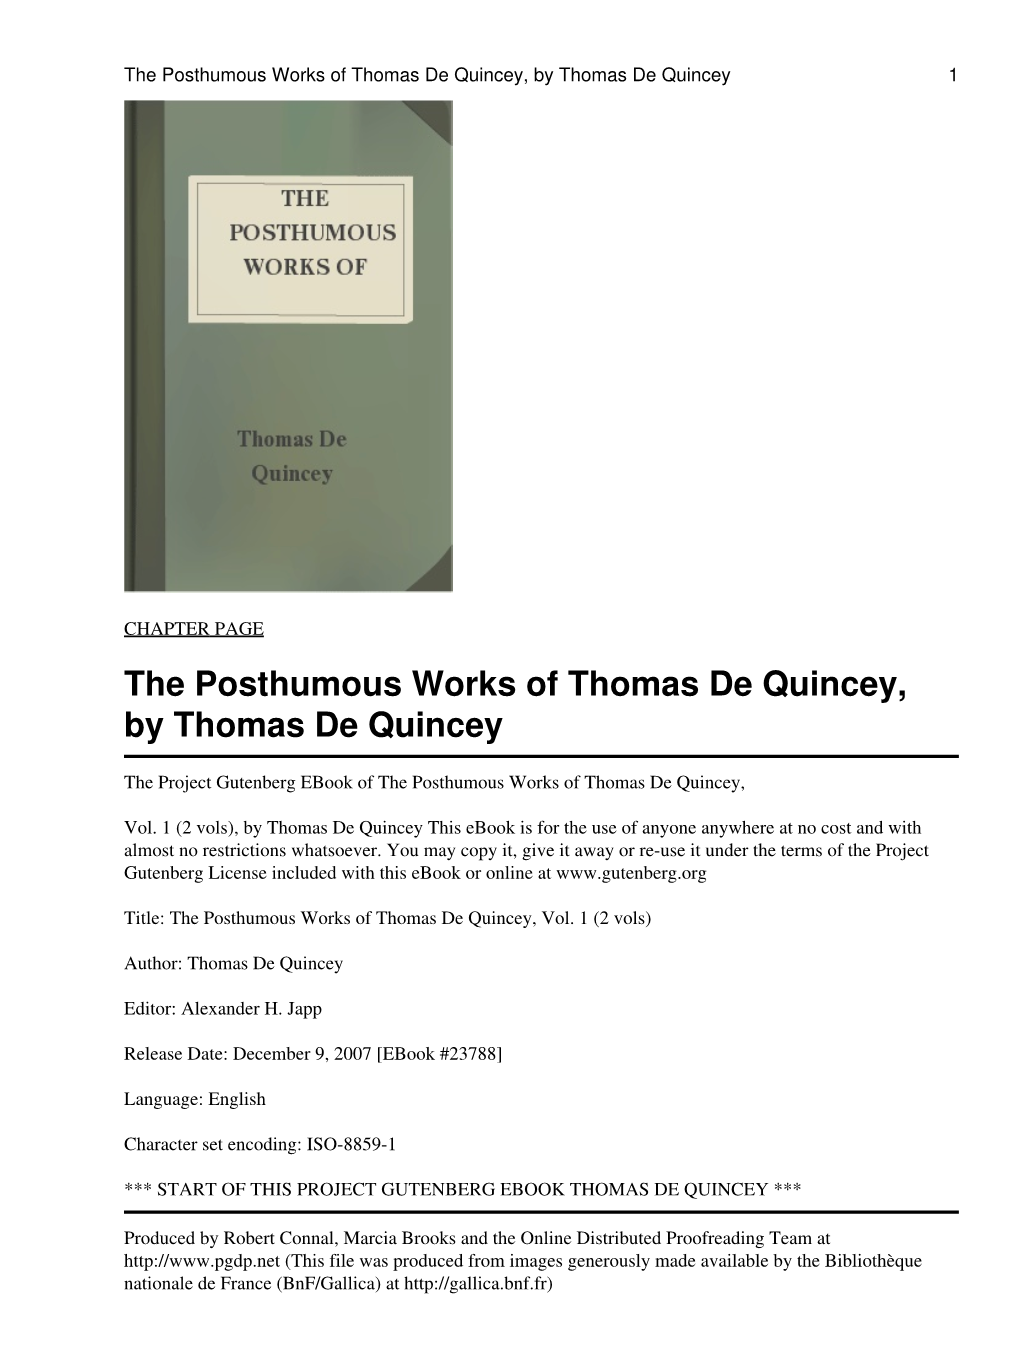 The Posthumous Works of Thomas De Quincey, Vol. 1 (2 Vols)